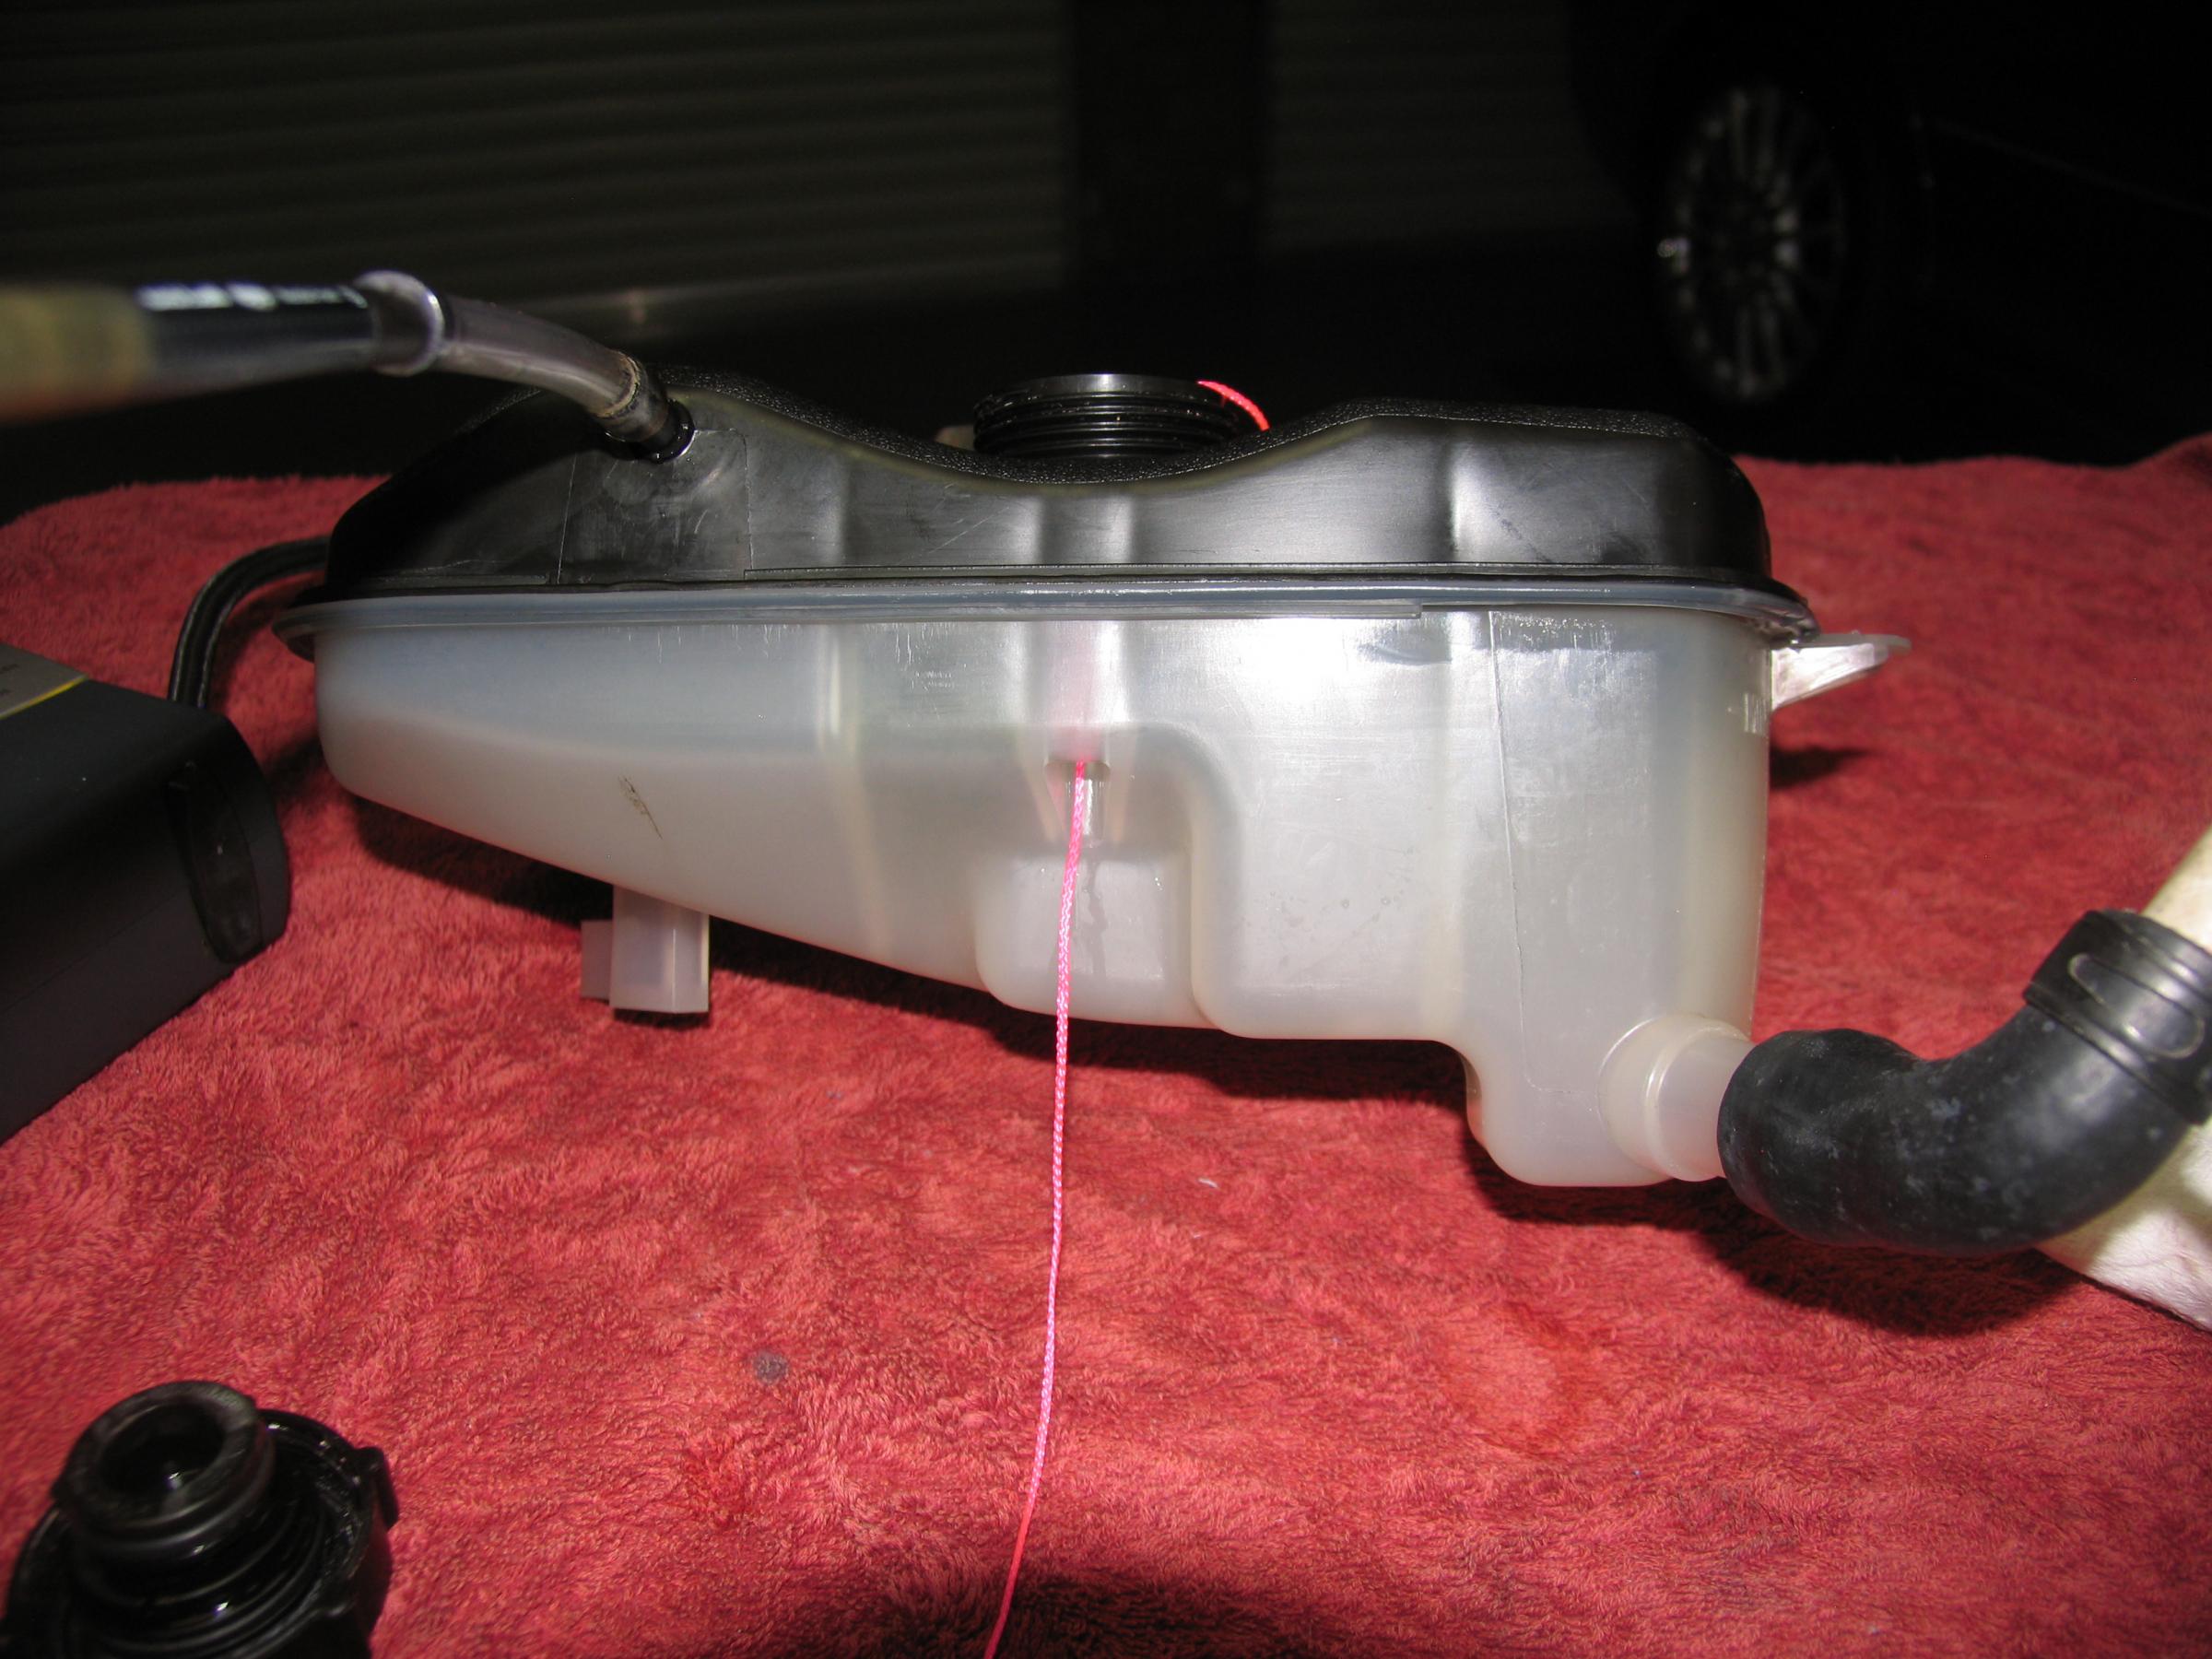 coolant pressure tank